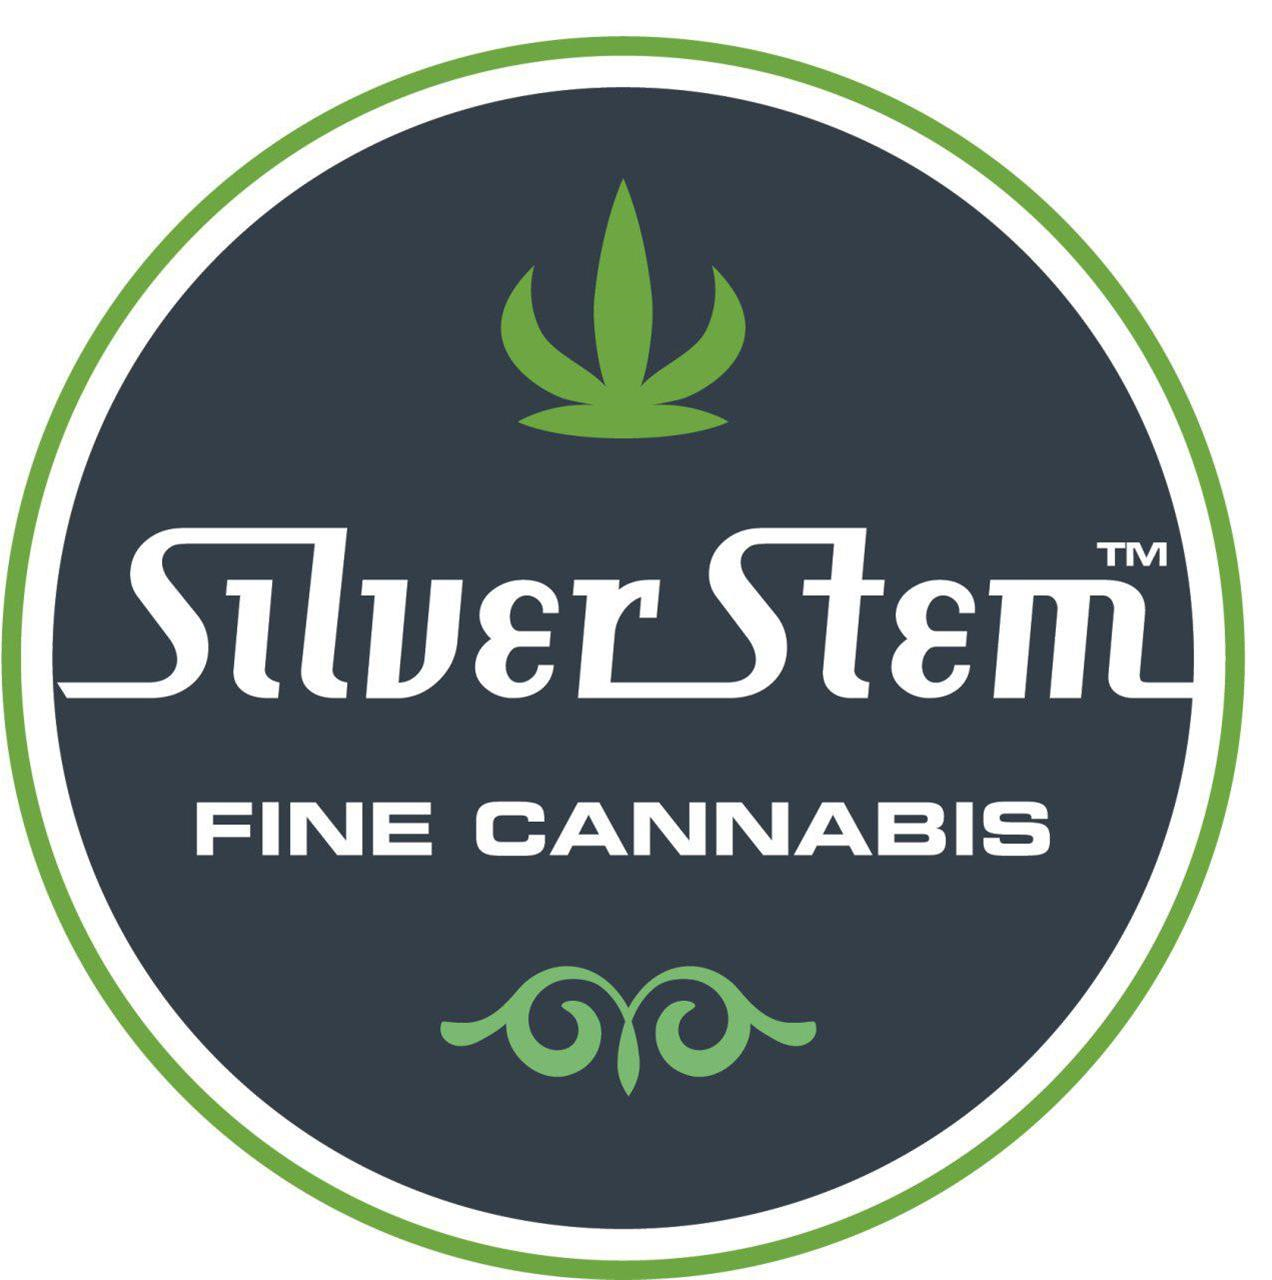 Silver Stem Fine Cannabis 